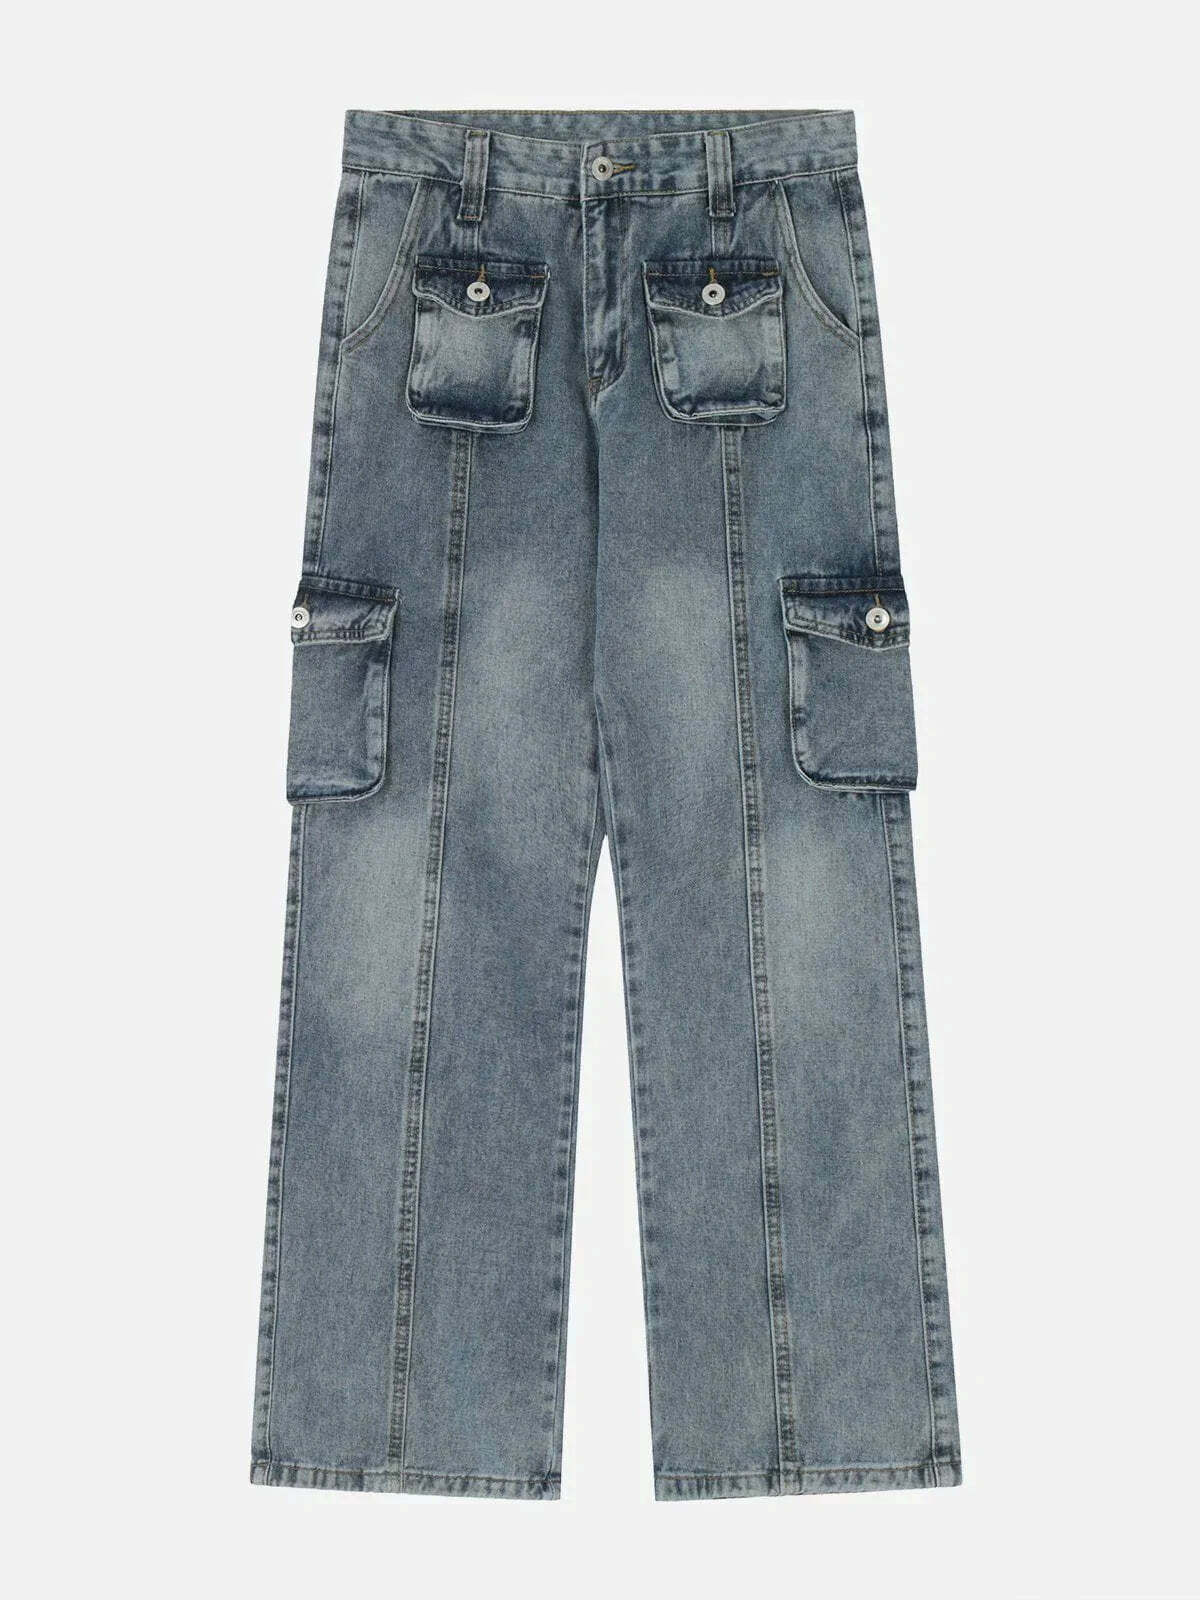 multipocket vintage jeans edgy & retro streetwear 6610